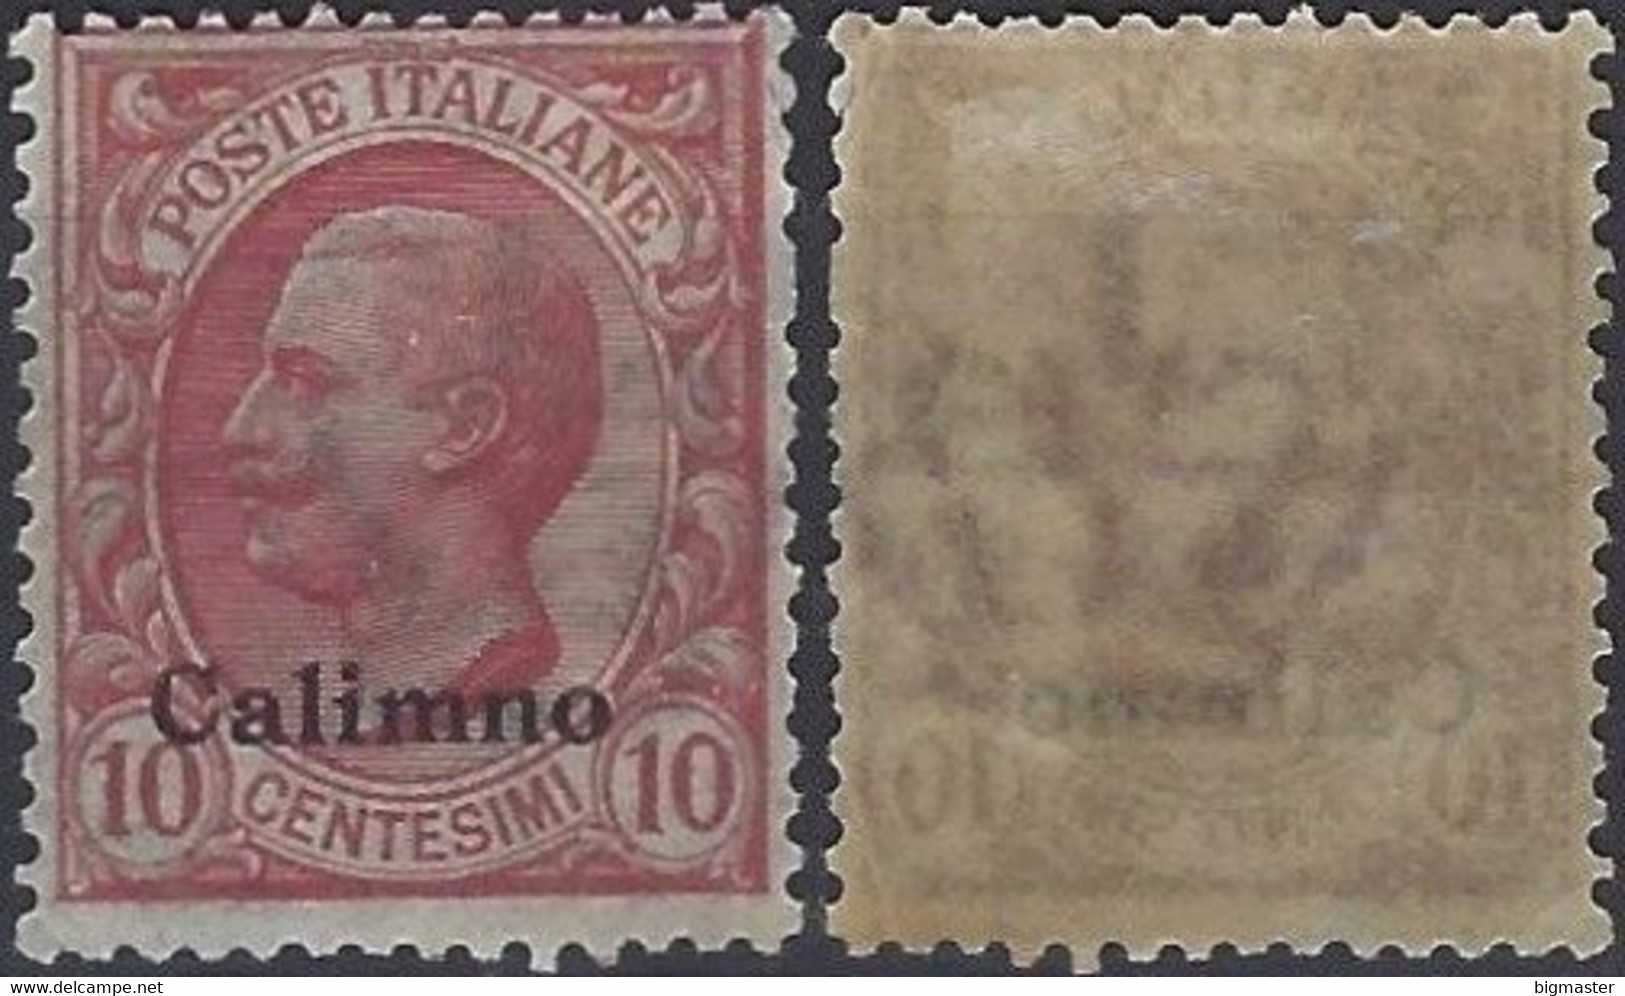 1912 Regno D'Italia IG 1912 IT-EG CA3 10c Italy Stamps Overprinted 'Calimno' New - Egeo (Calino)